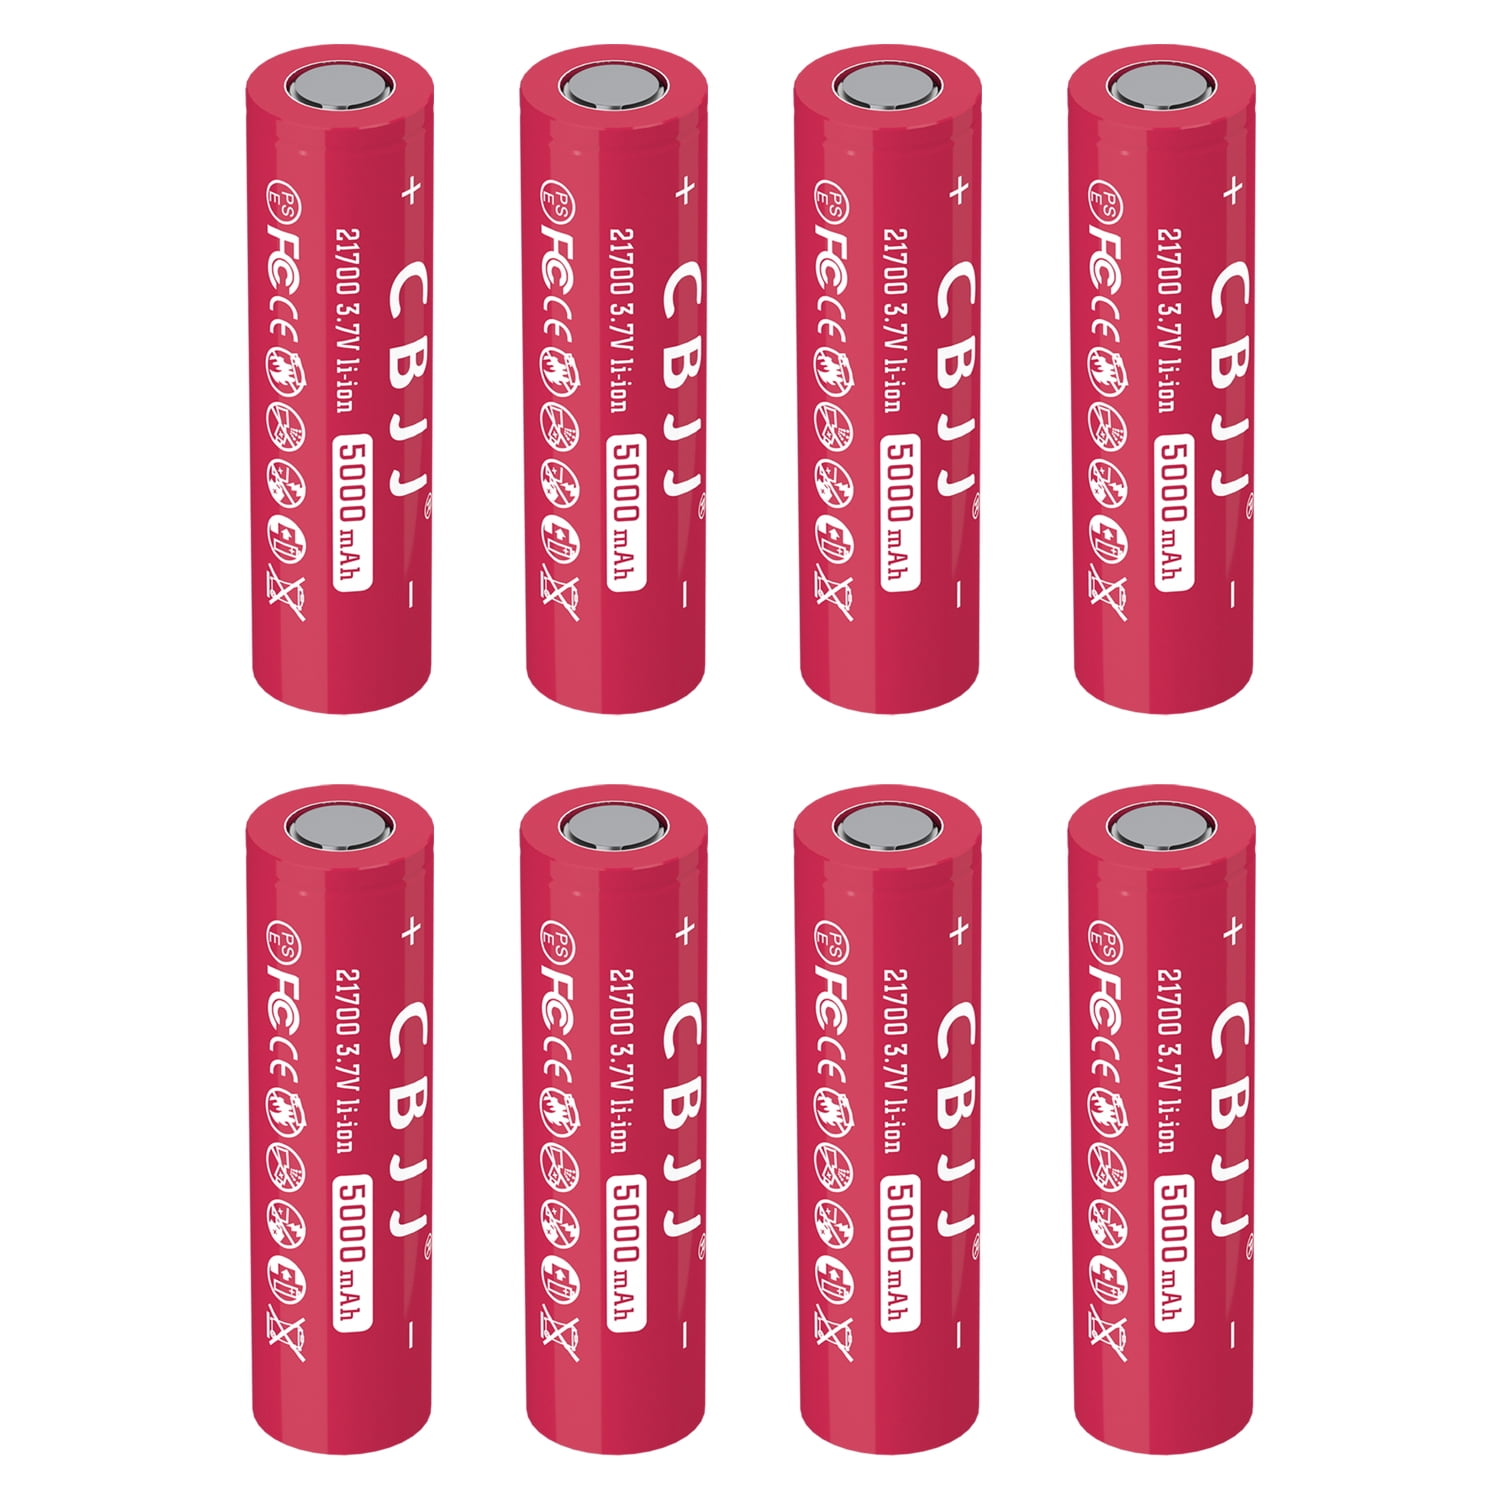 CBJJ 21700 Rechargeable Battery, 3.7 Volt 21700 Battery 5000mAh Flat Top  21700 Li-ion Battery for Flashlight (2 Pack, Black)